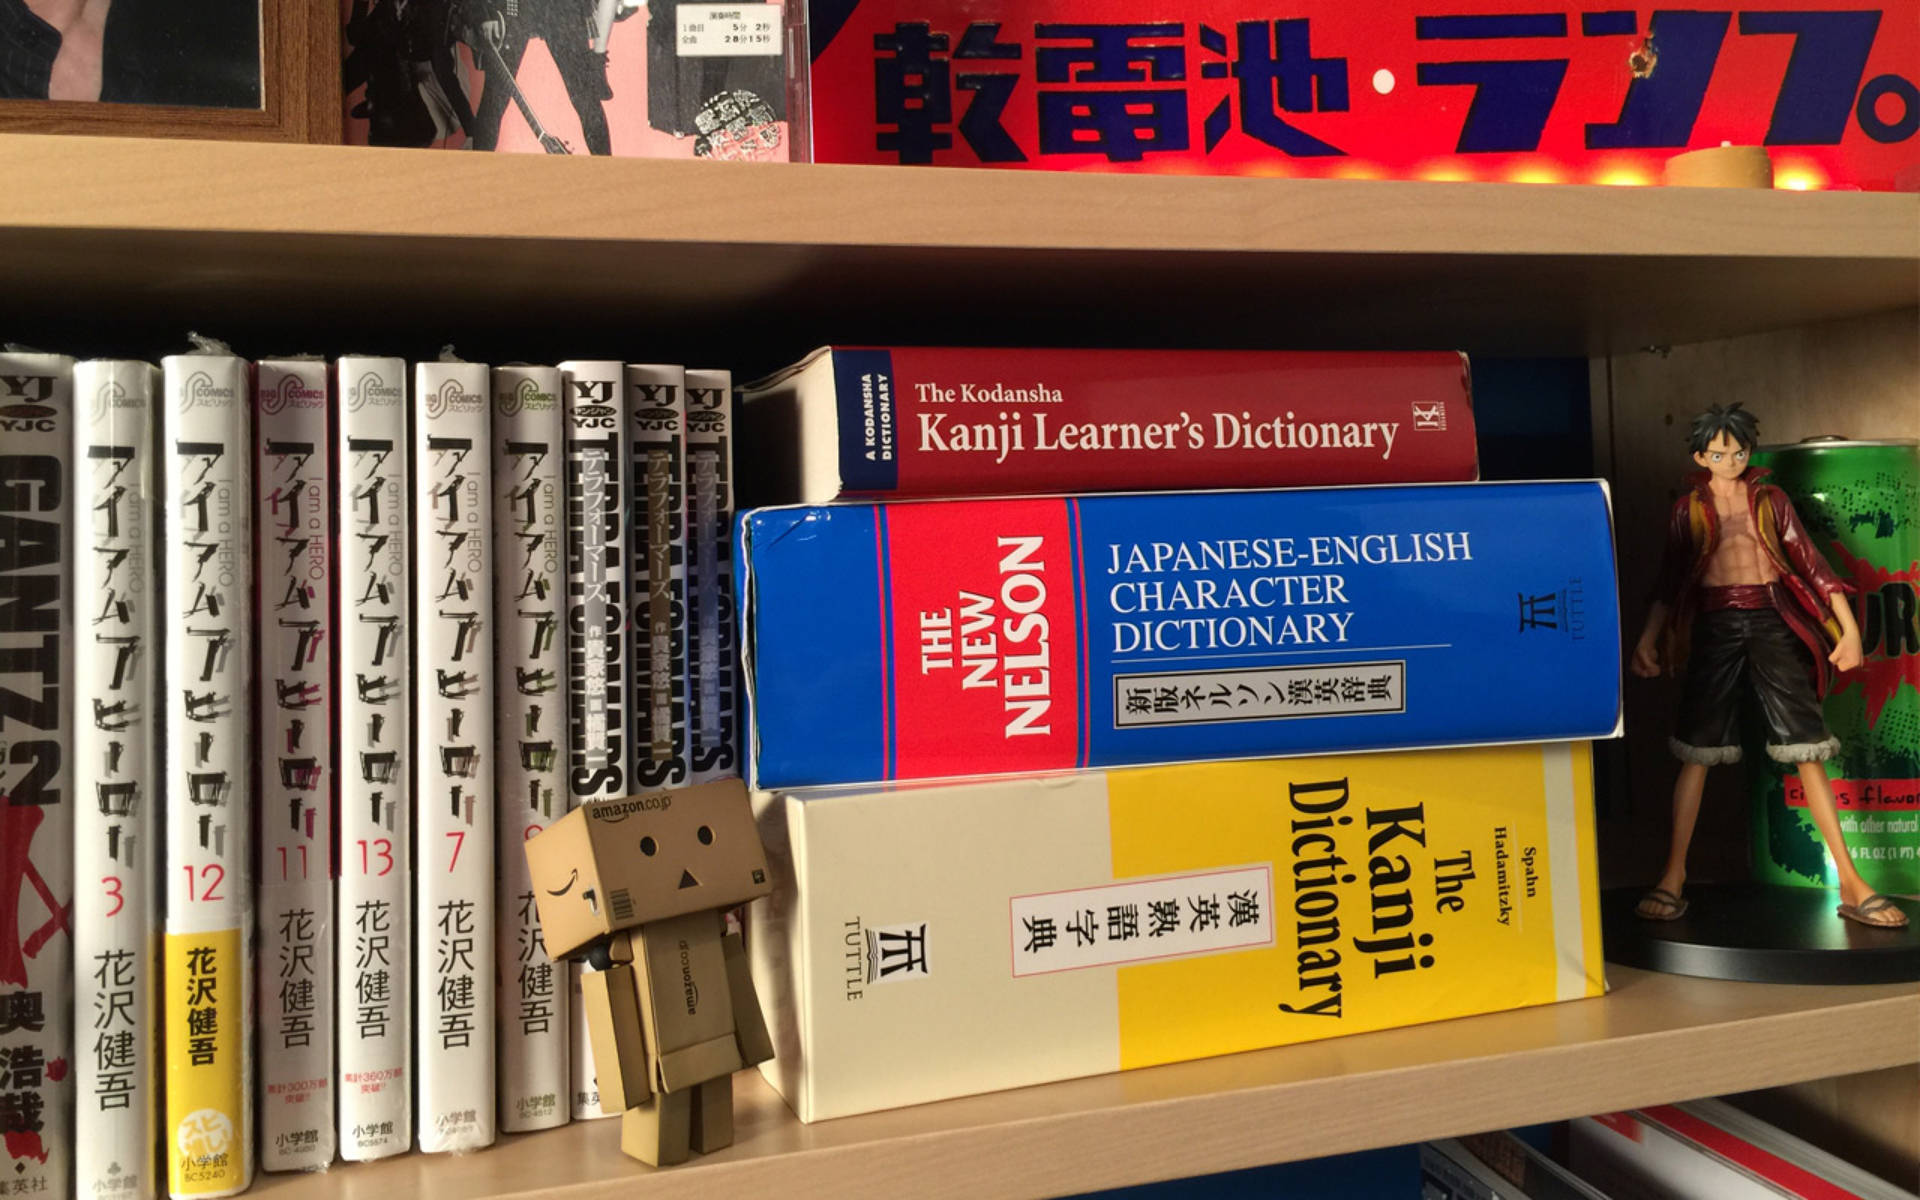 Dictionary In Bookshelf Background